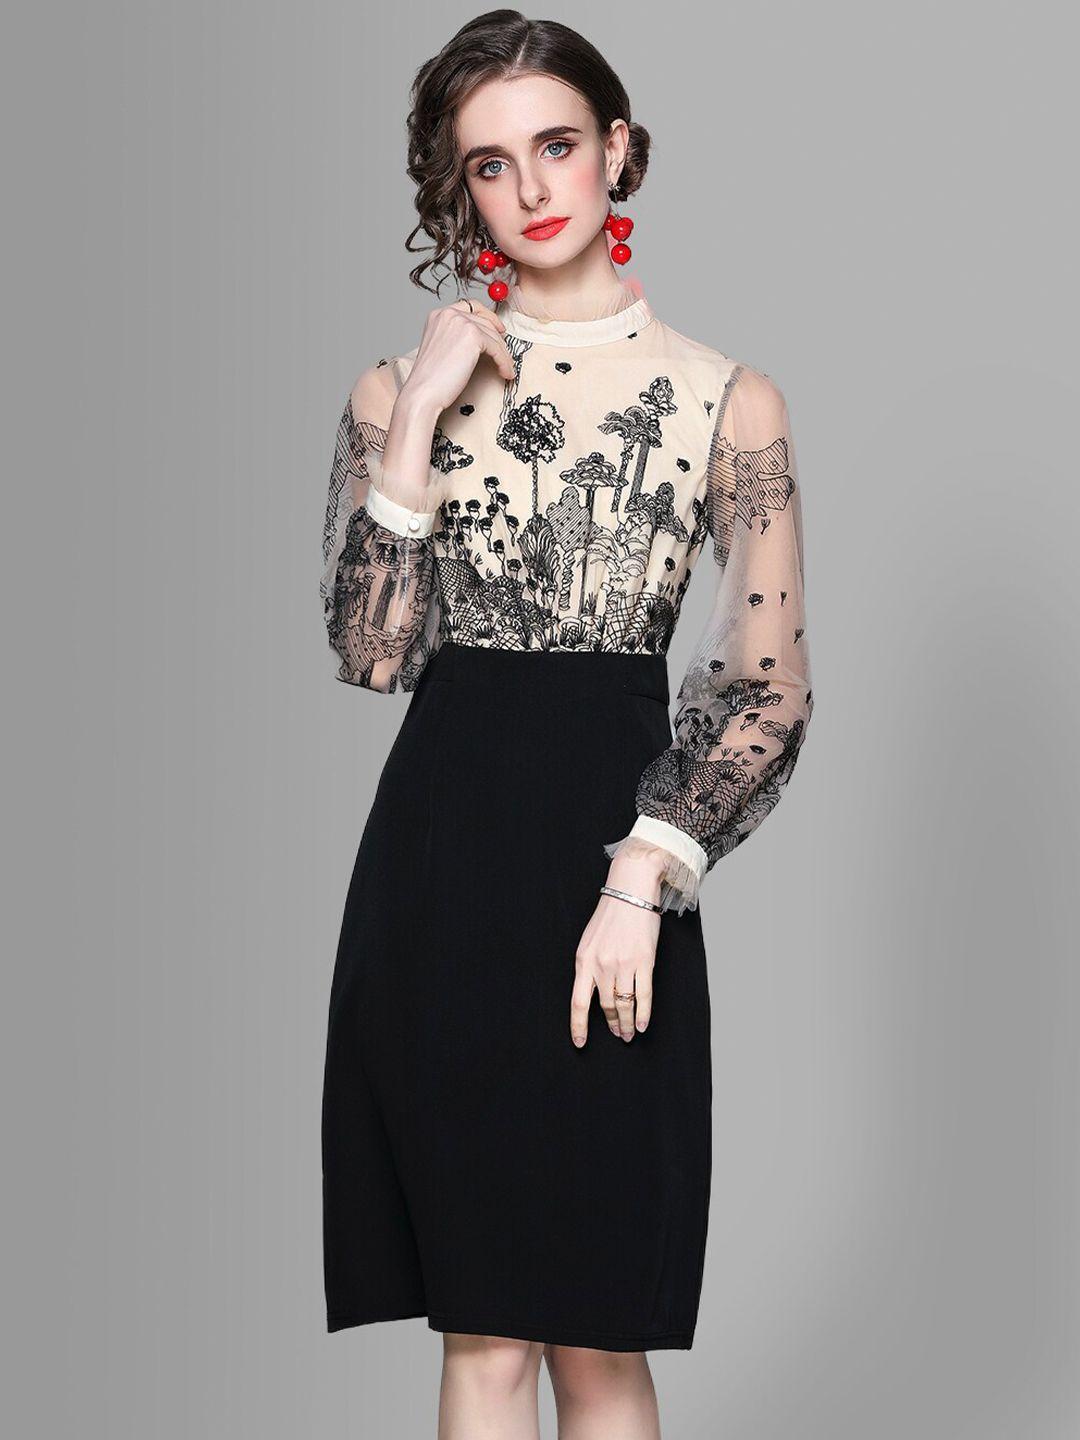 jc collection beige & black floral sheath dress